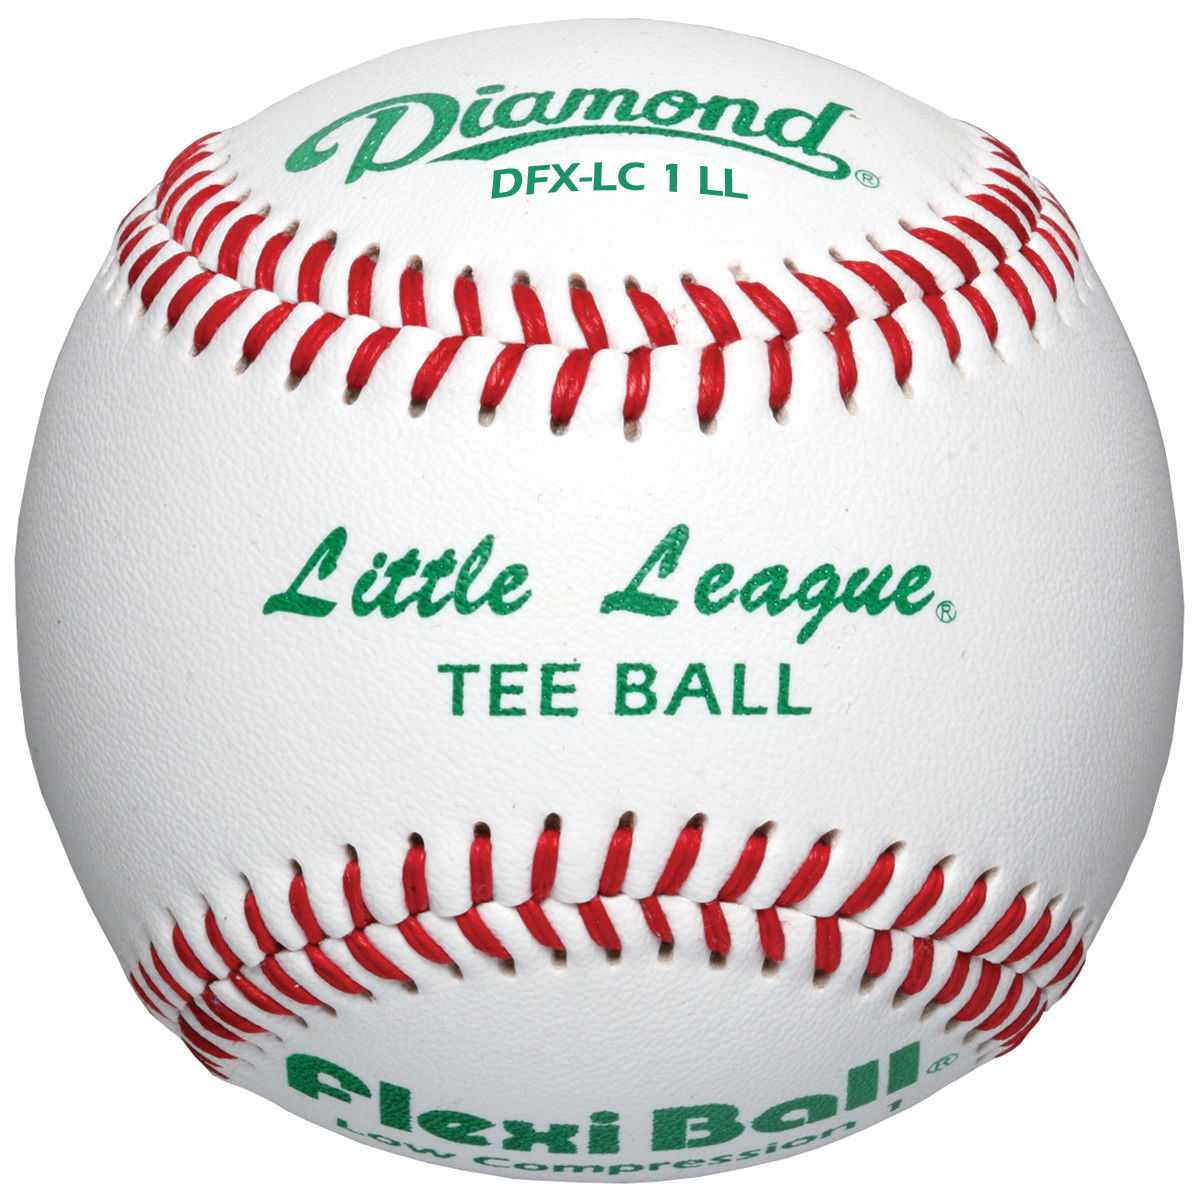 Diamond Little League Low Compression Level 1 Tee Ball Baseball - 1 dozen